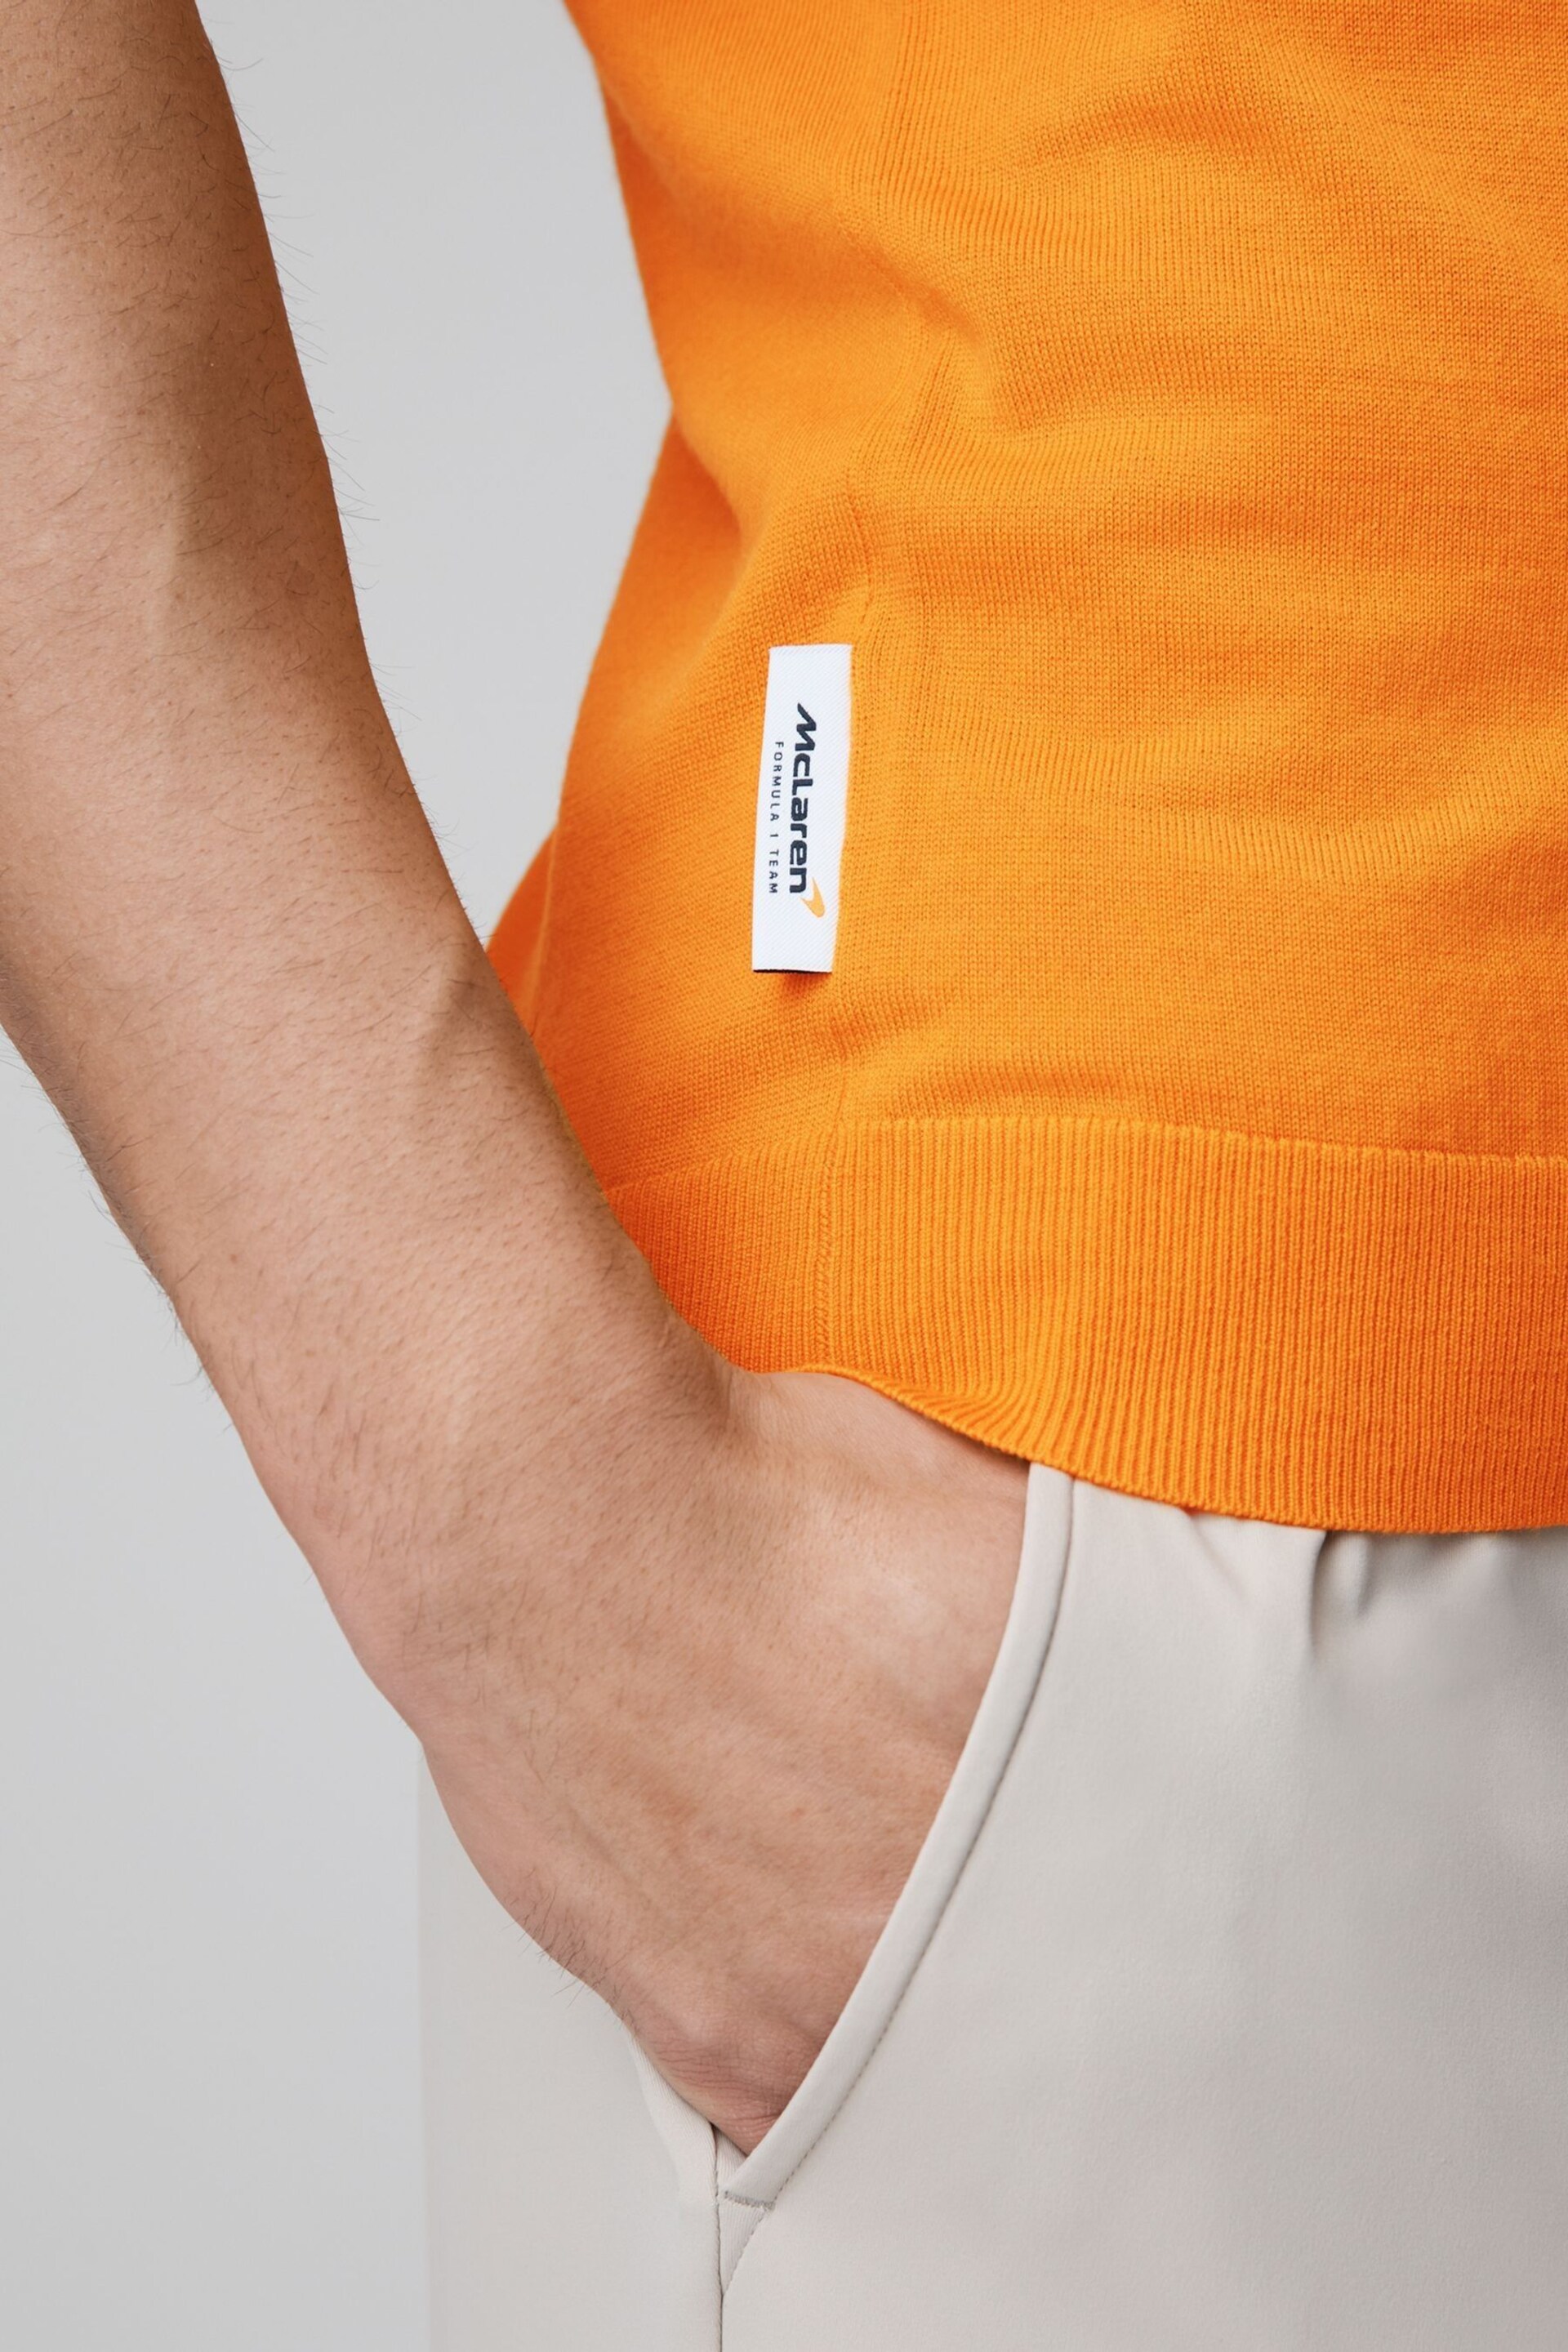 McLaren F1 Merino Wool Polo Shirt - Image 6 of 8